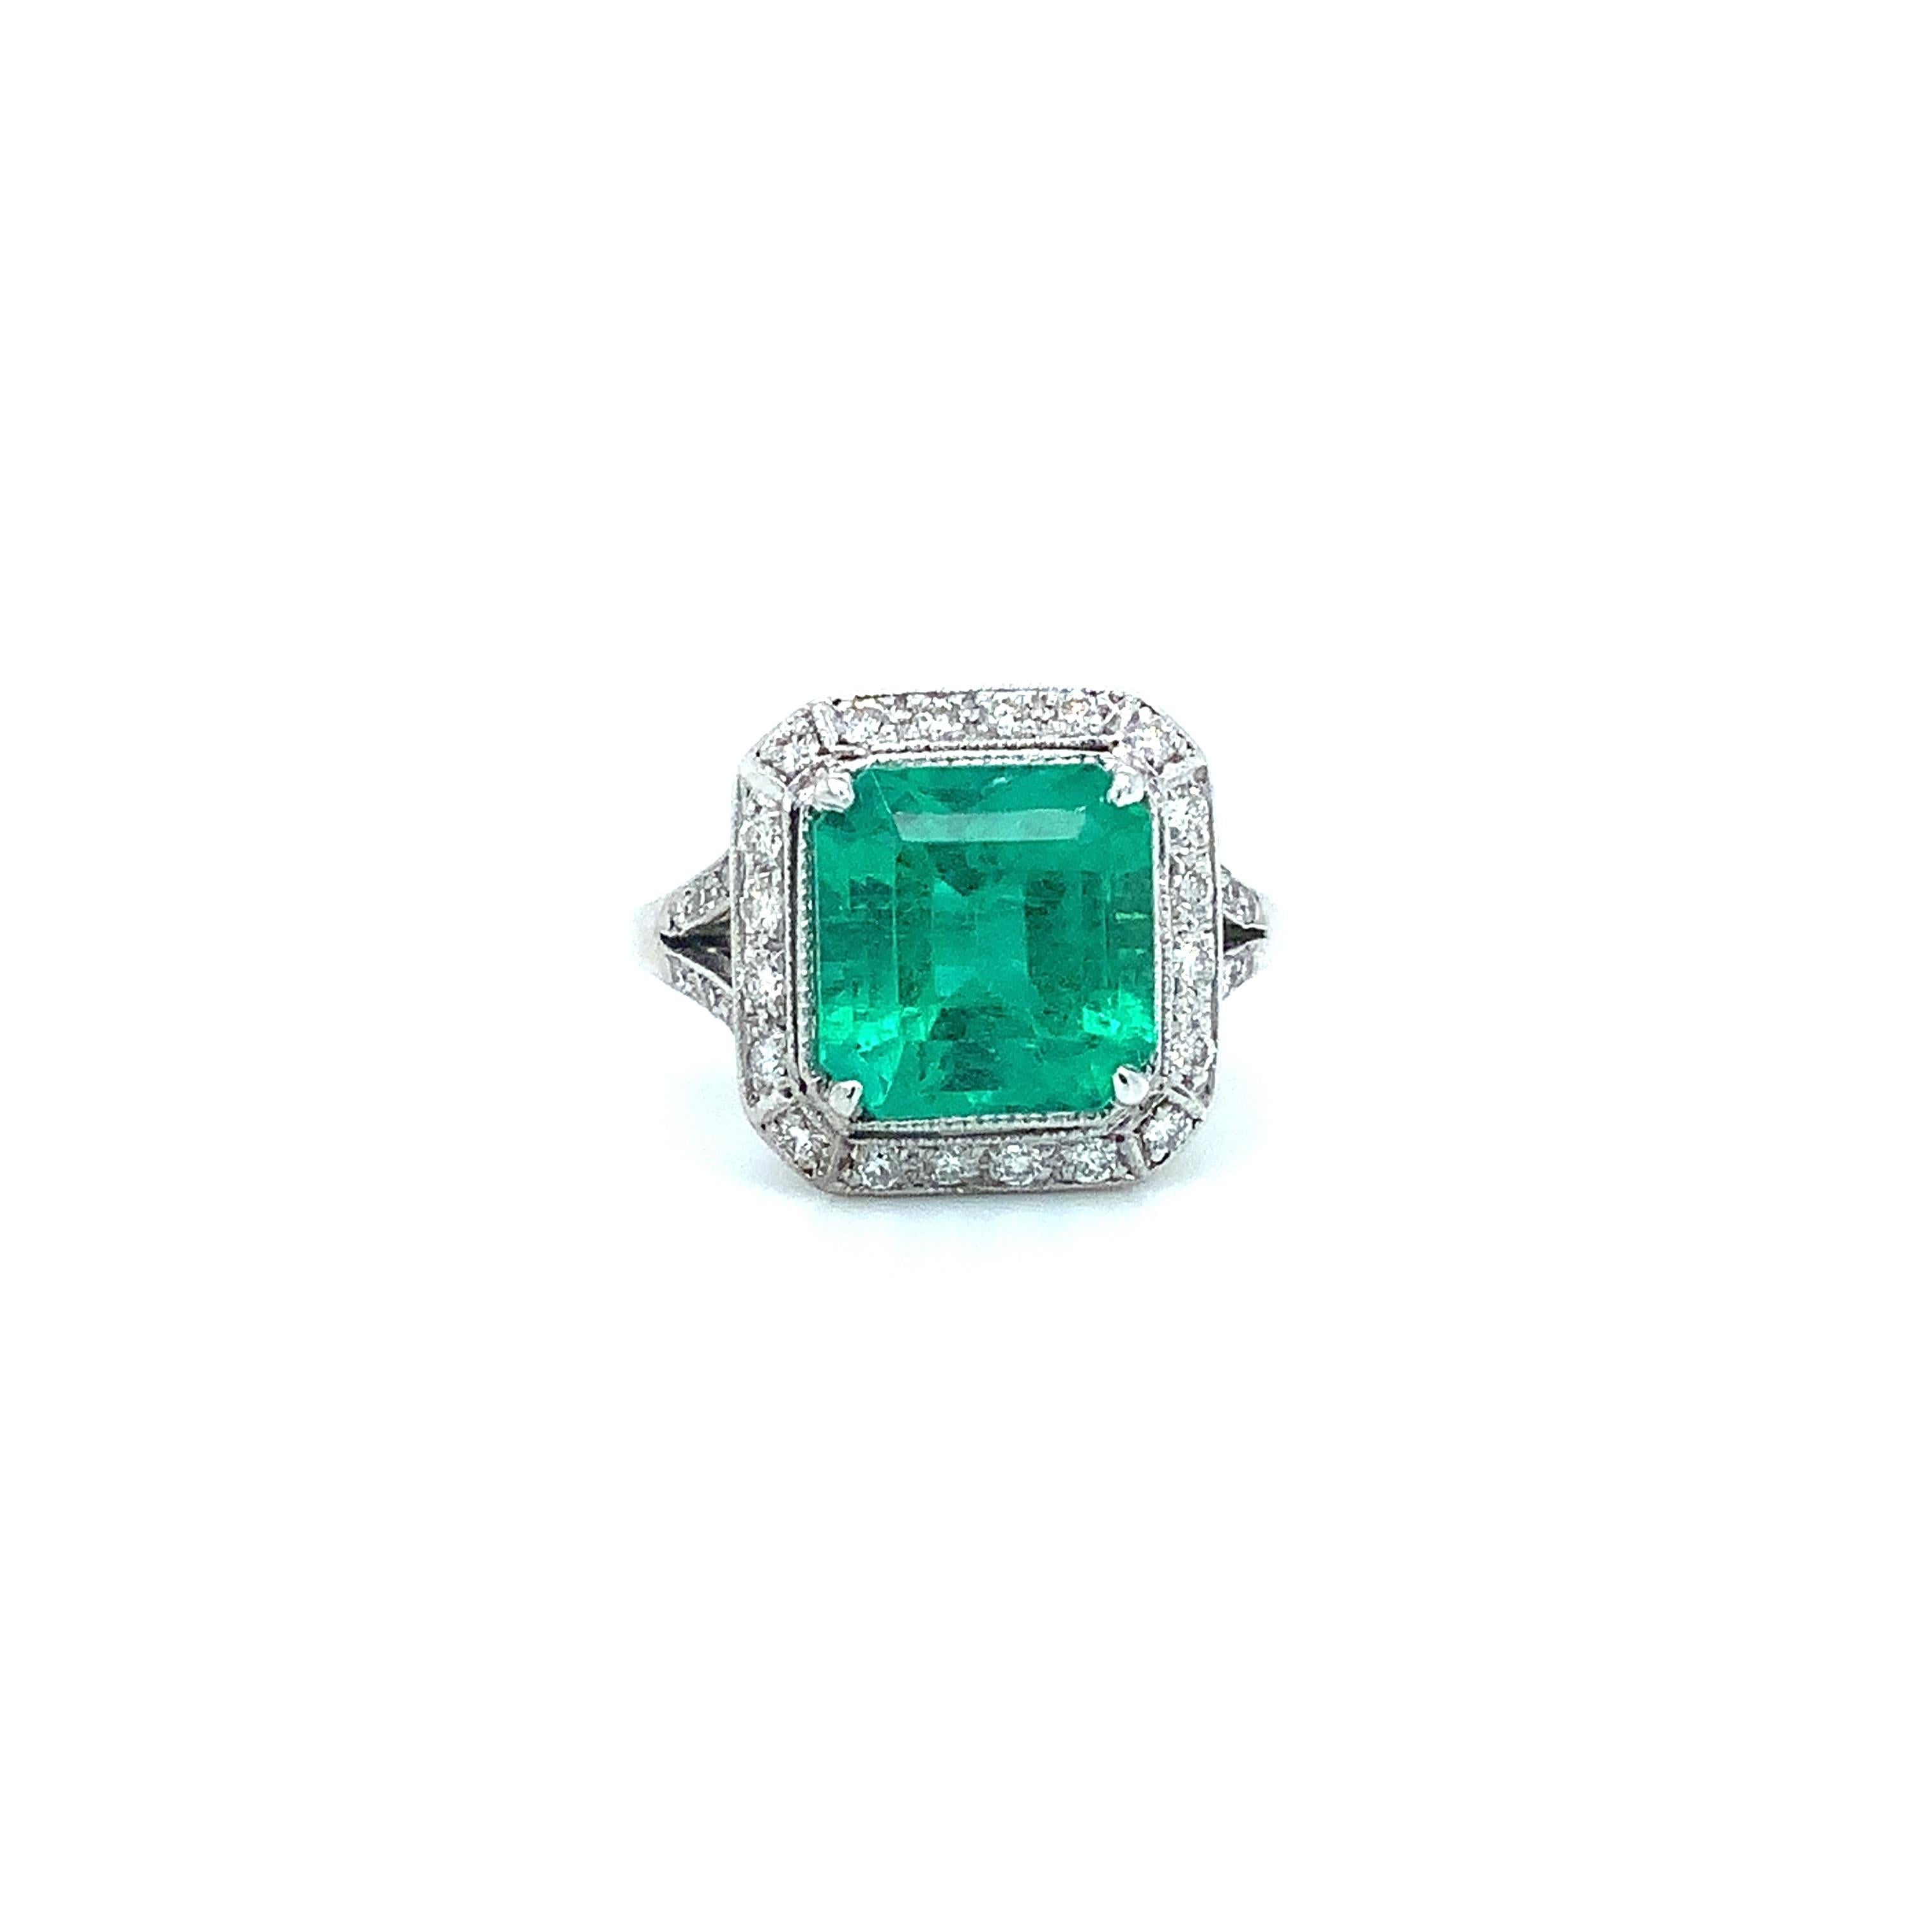 3.19 Carat Vintage Emerald and Diamond Ring Set in 18 Karat White Gold For Sale 2